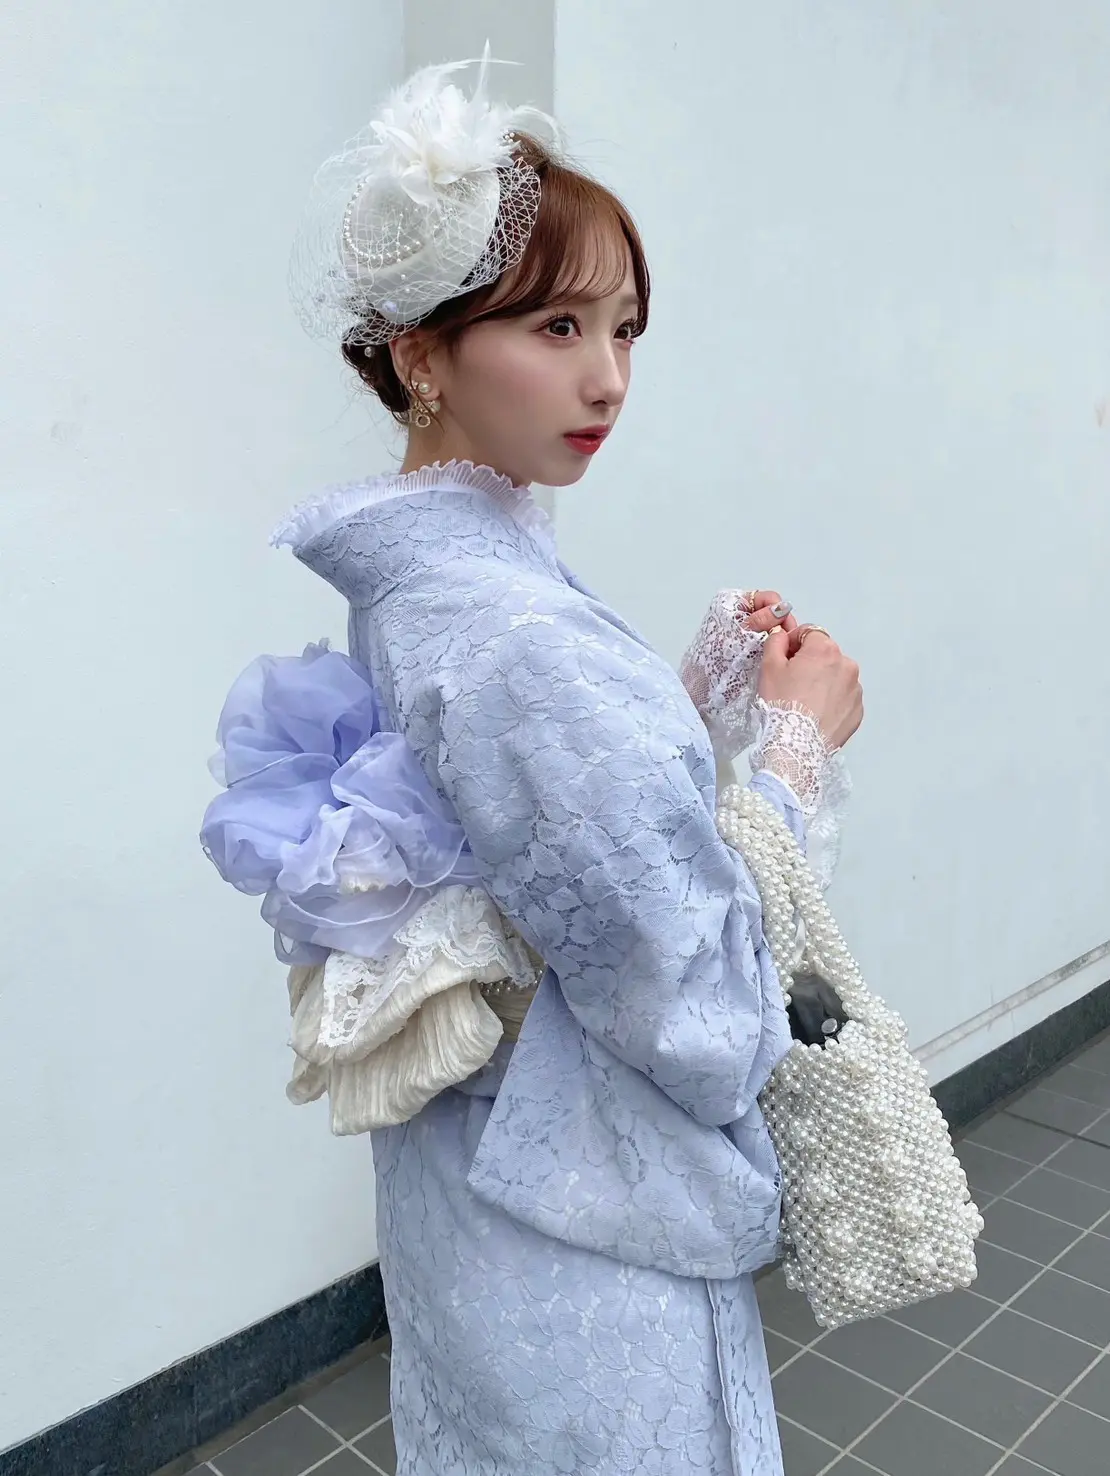 Blue-Based Lace Kimono Coordination with a White Obi